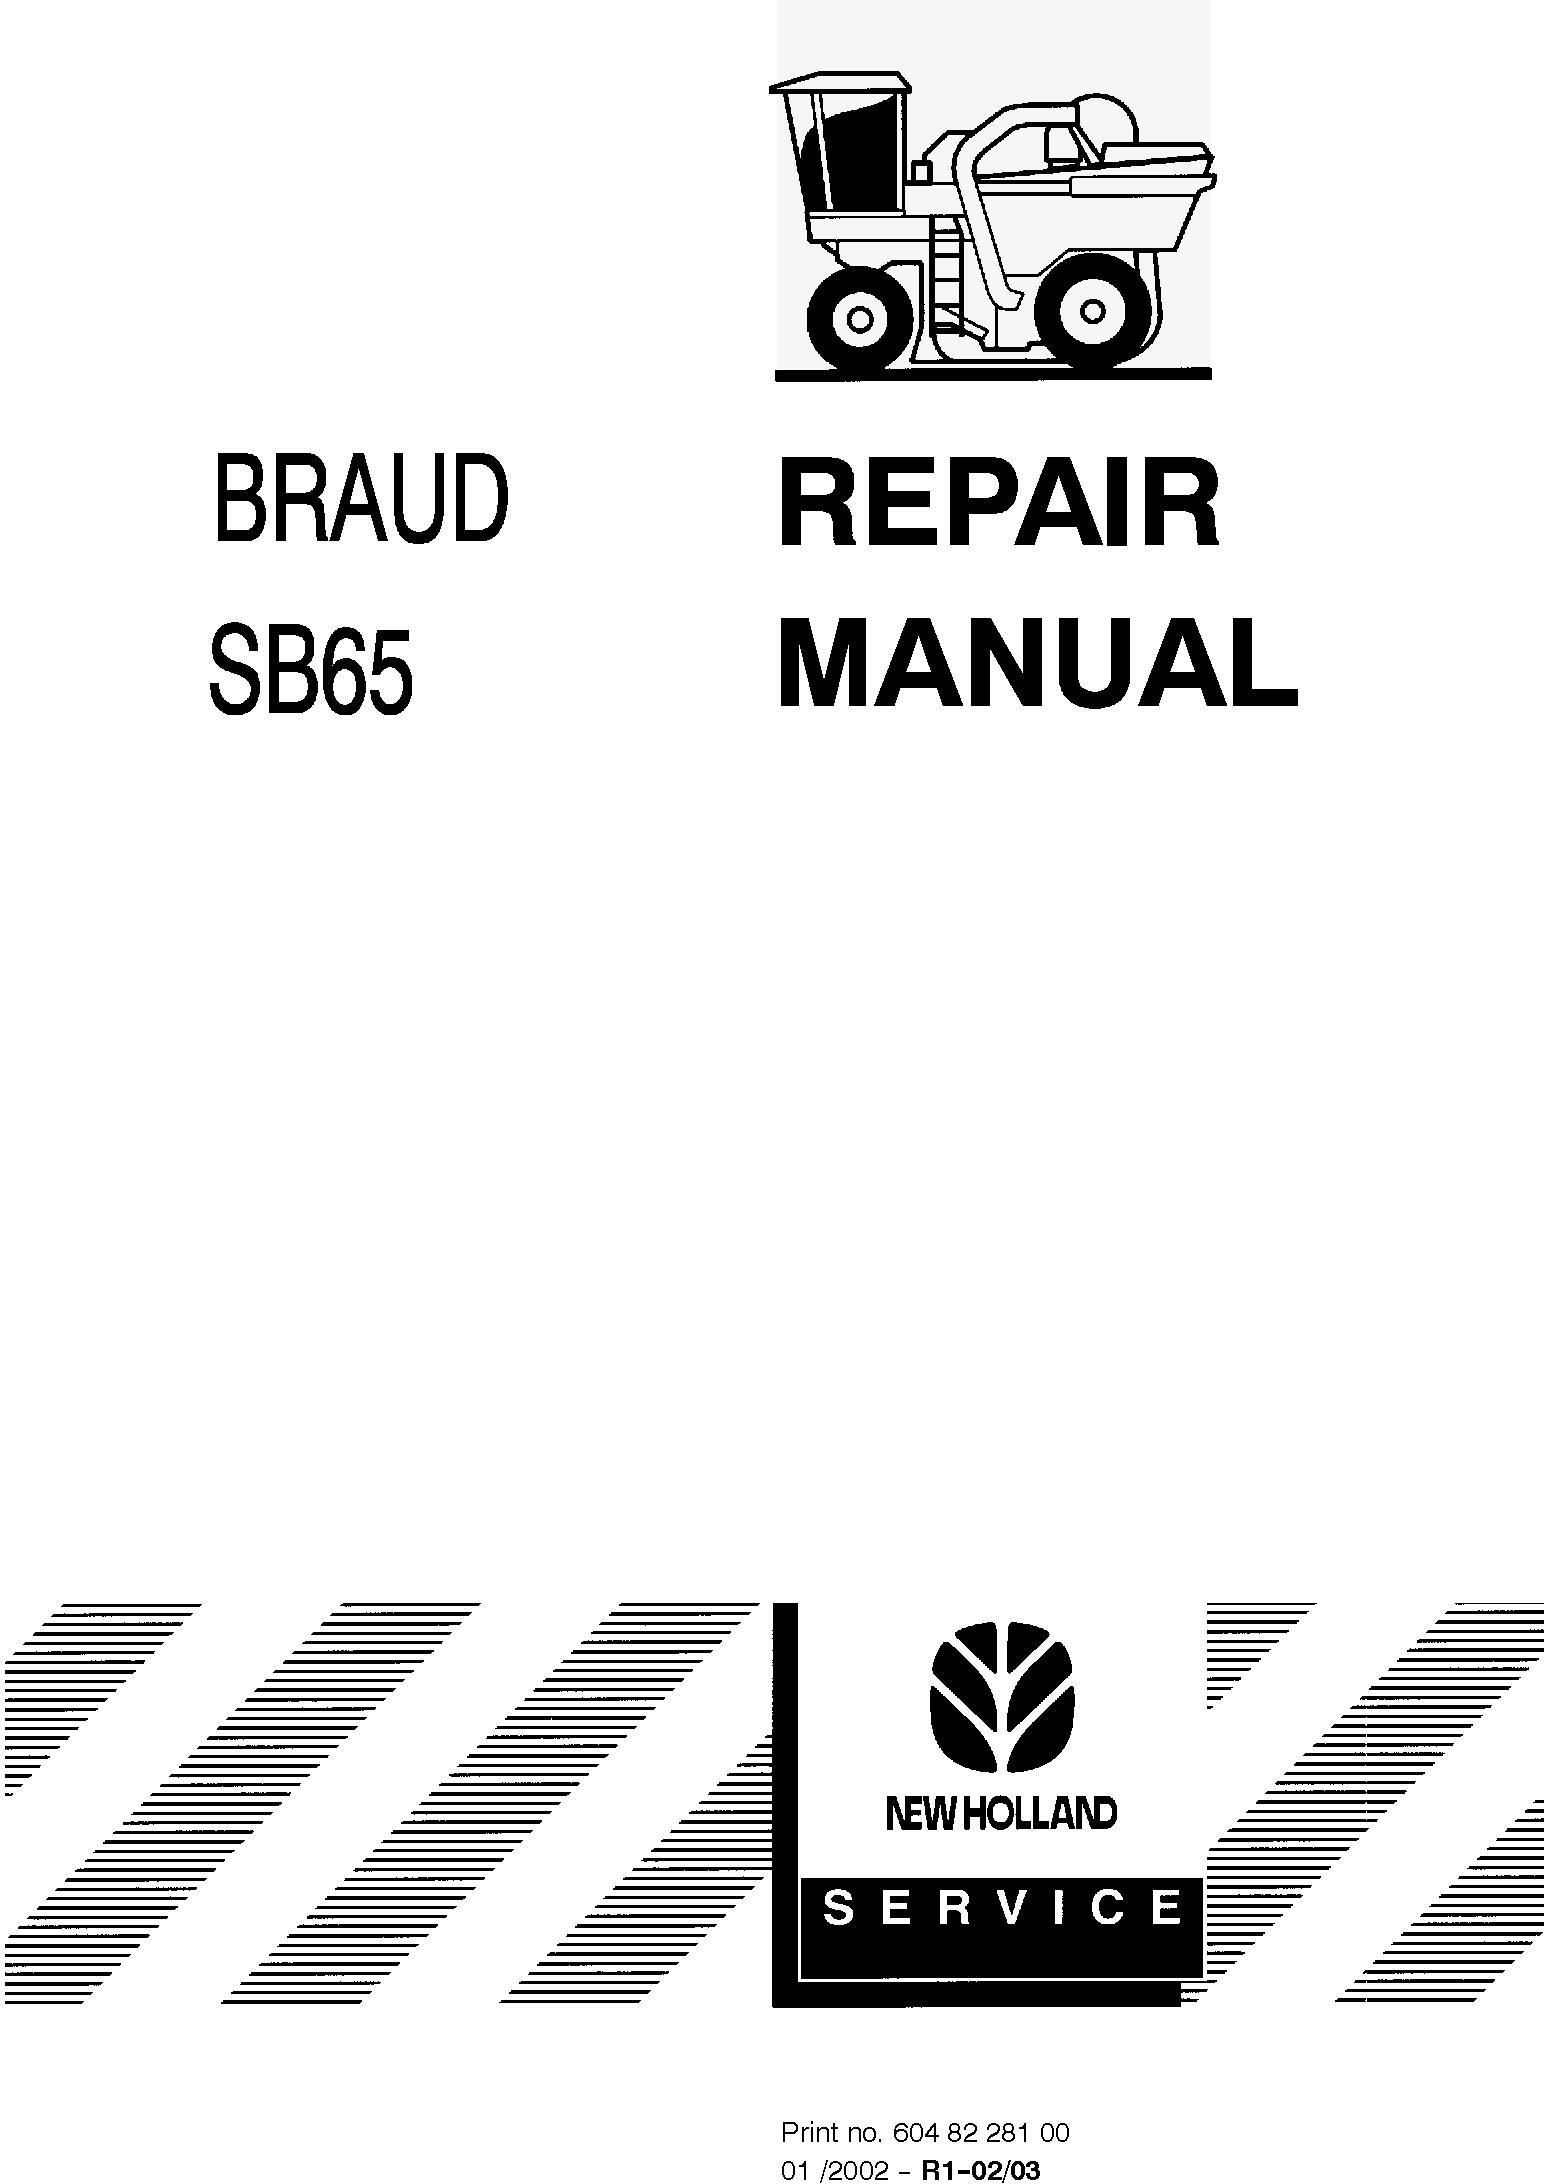 New Holland BRAUD SB65 Grape Harvester Service Manual - 20009